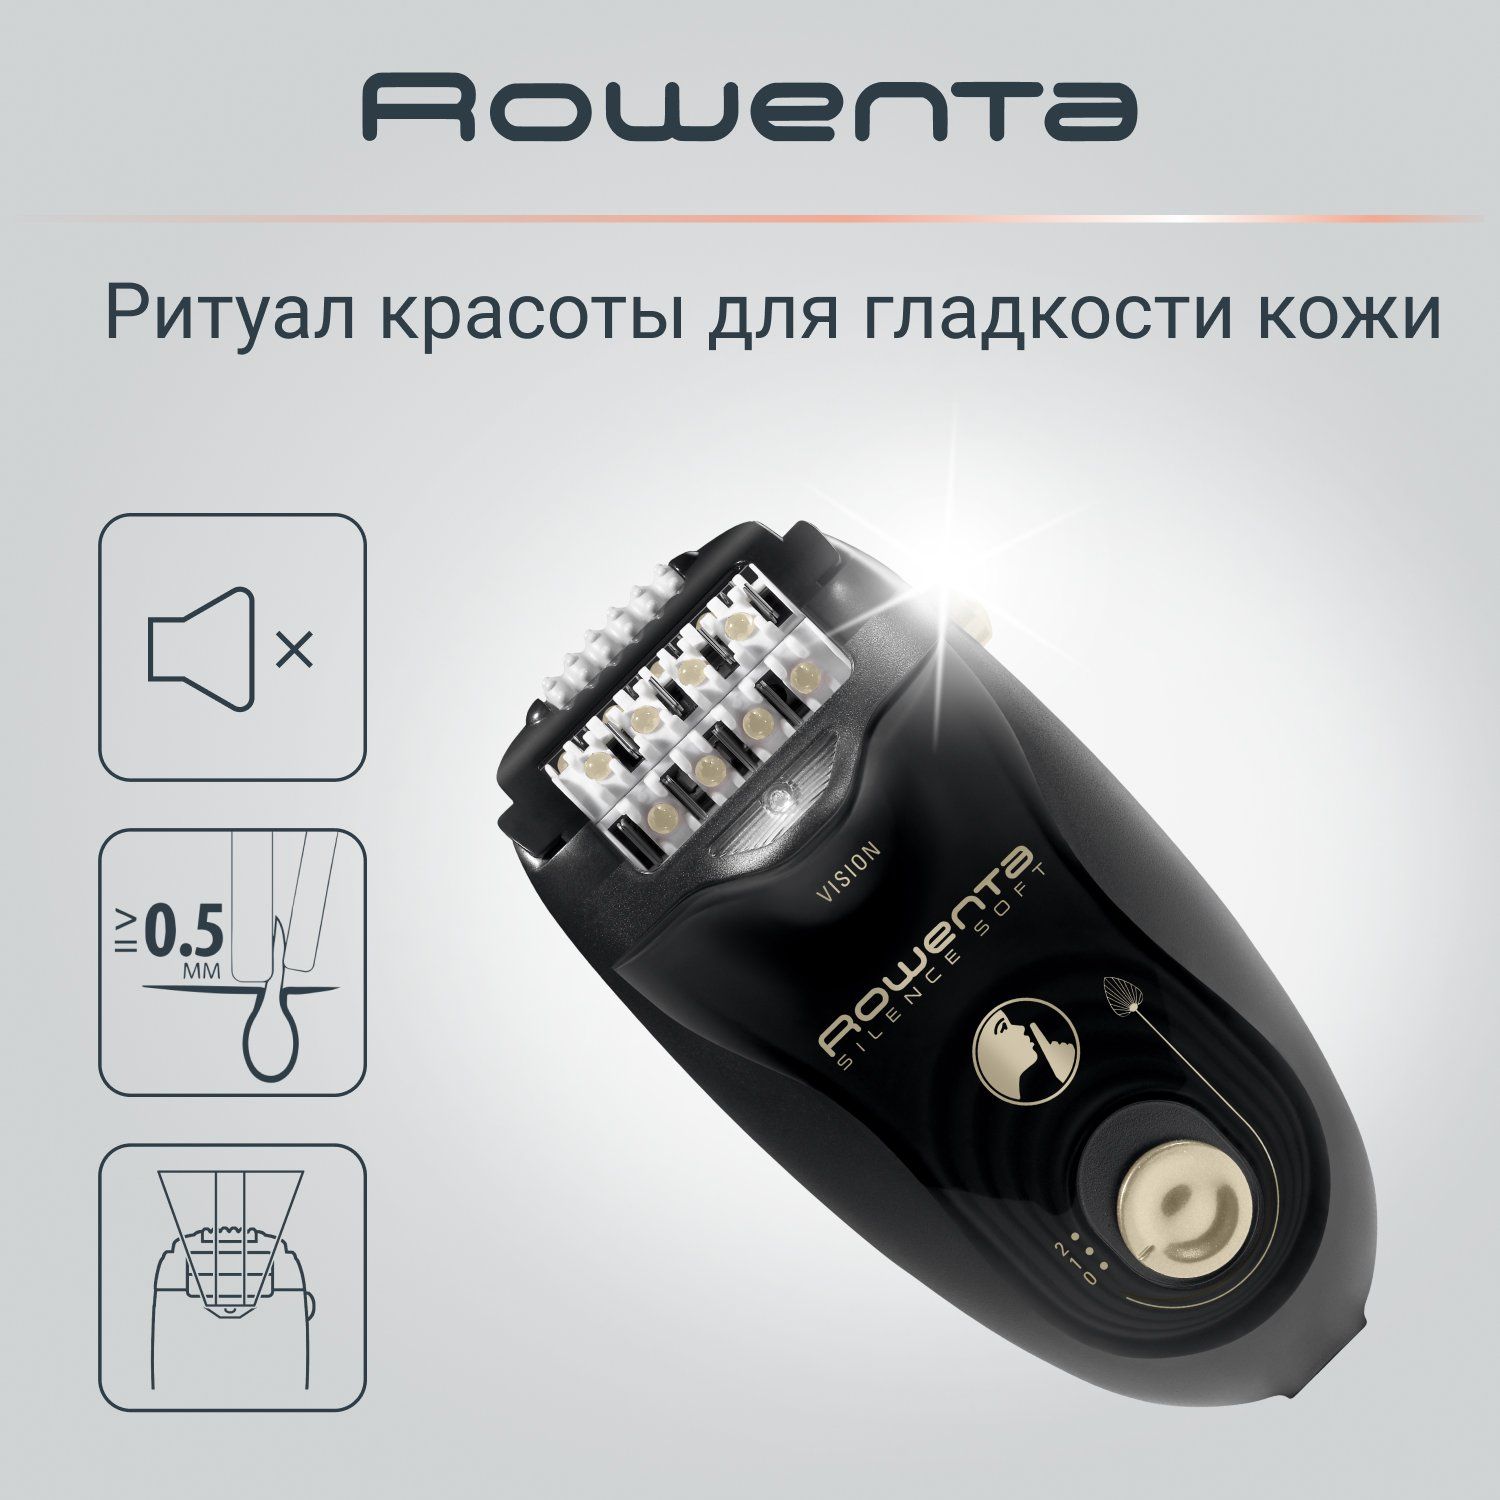 Эпилятор Rowenta Silence Soft EP5628F0, черный эпилятор rowenta ep5720f0